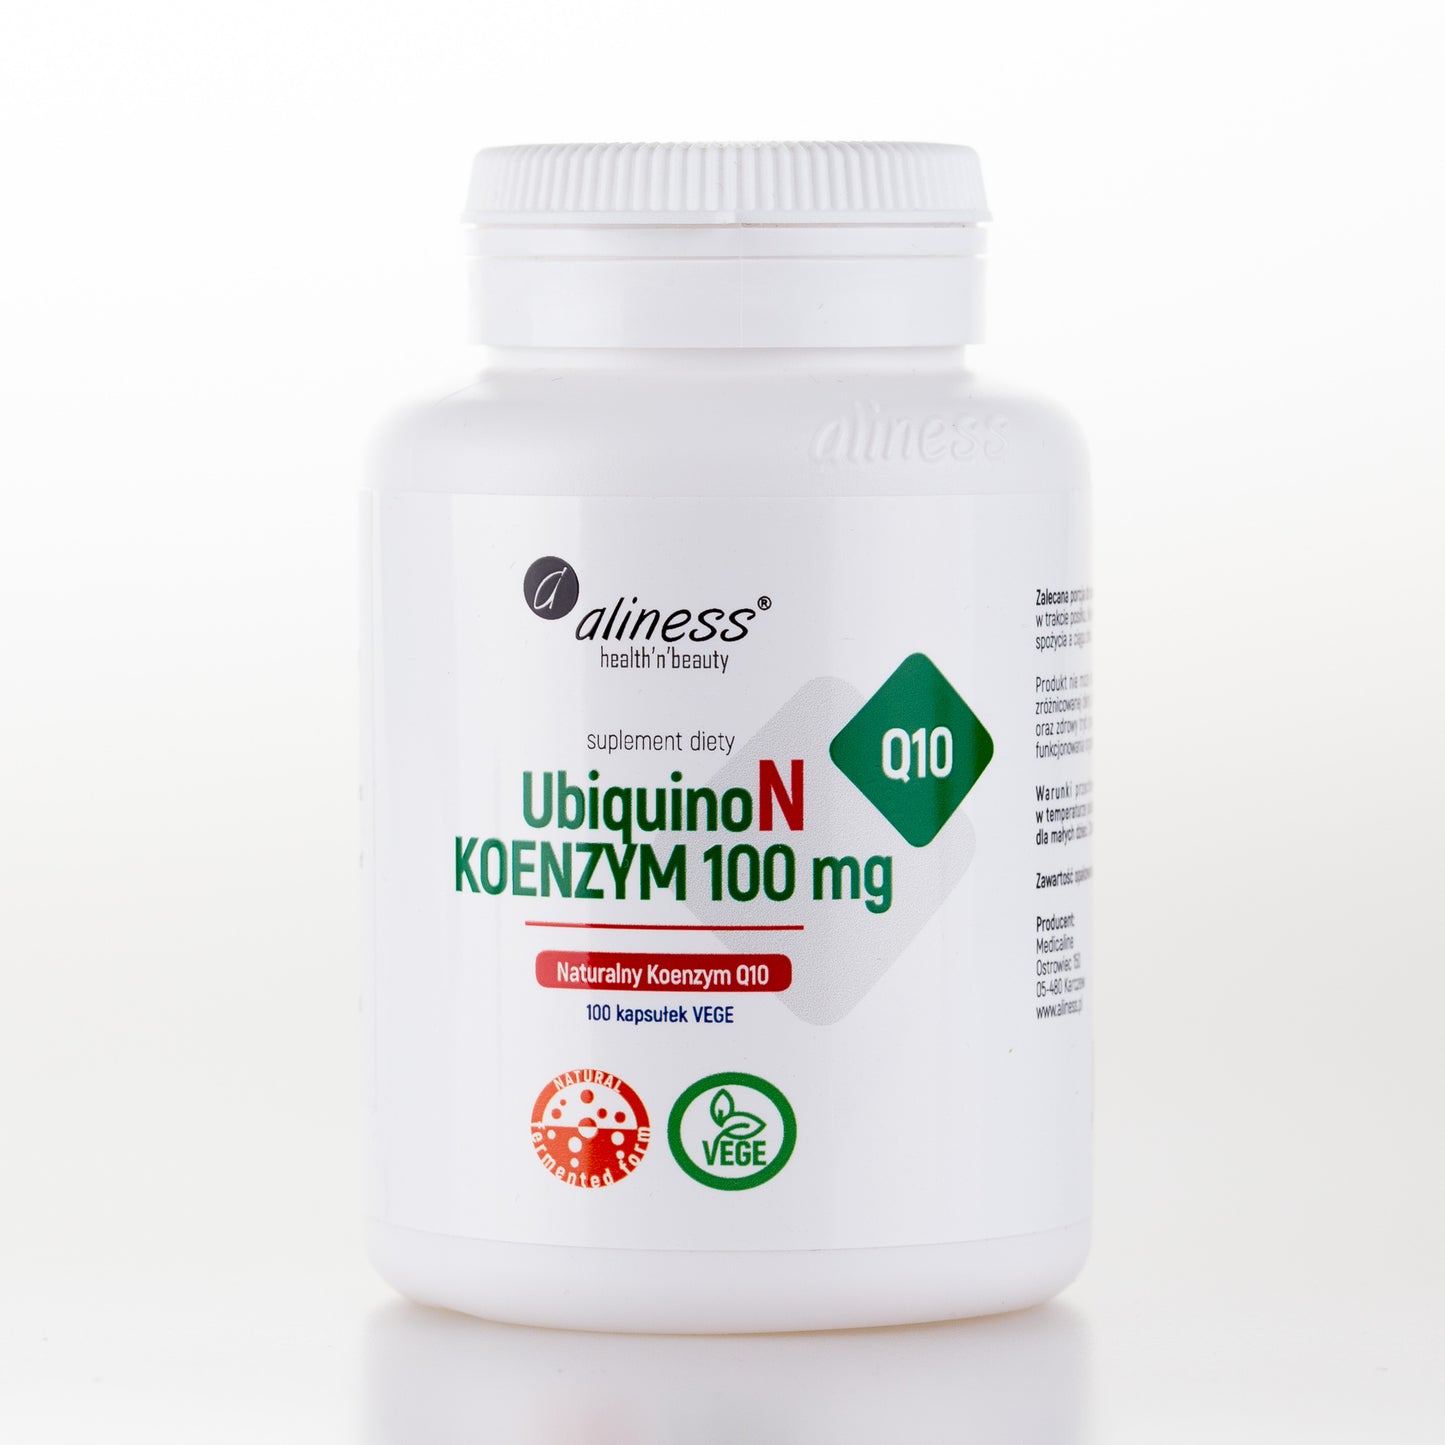 UbiquinoN Natural Coenzyme Q10 100mg, 100 Vegan capsules, Antioxidant